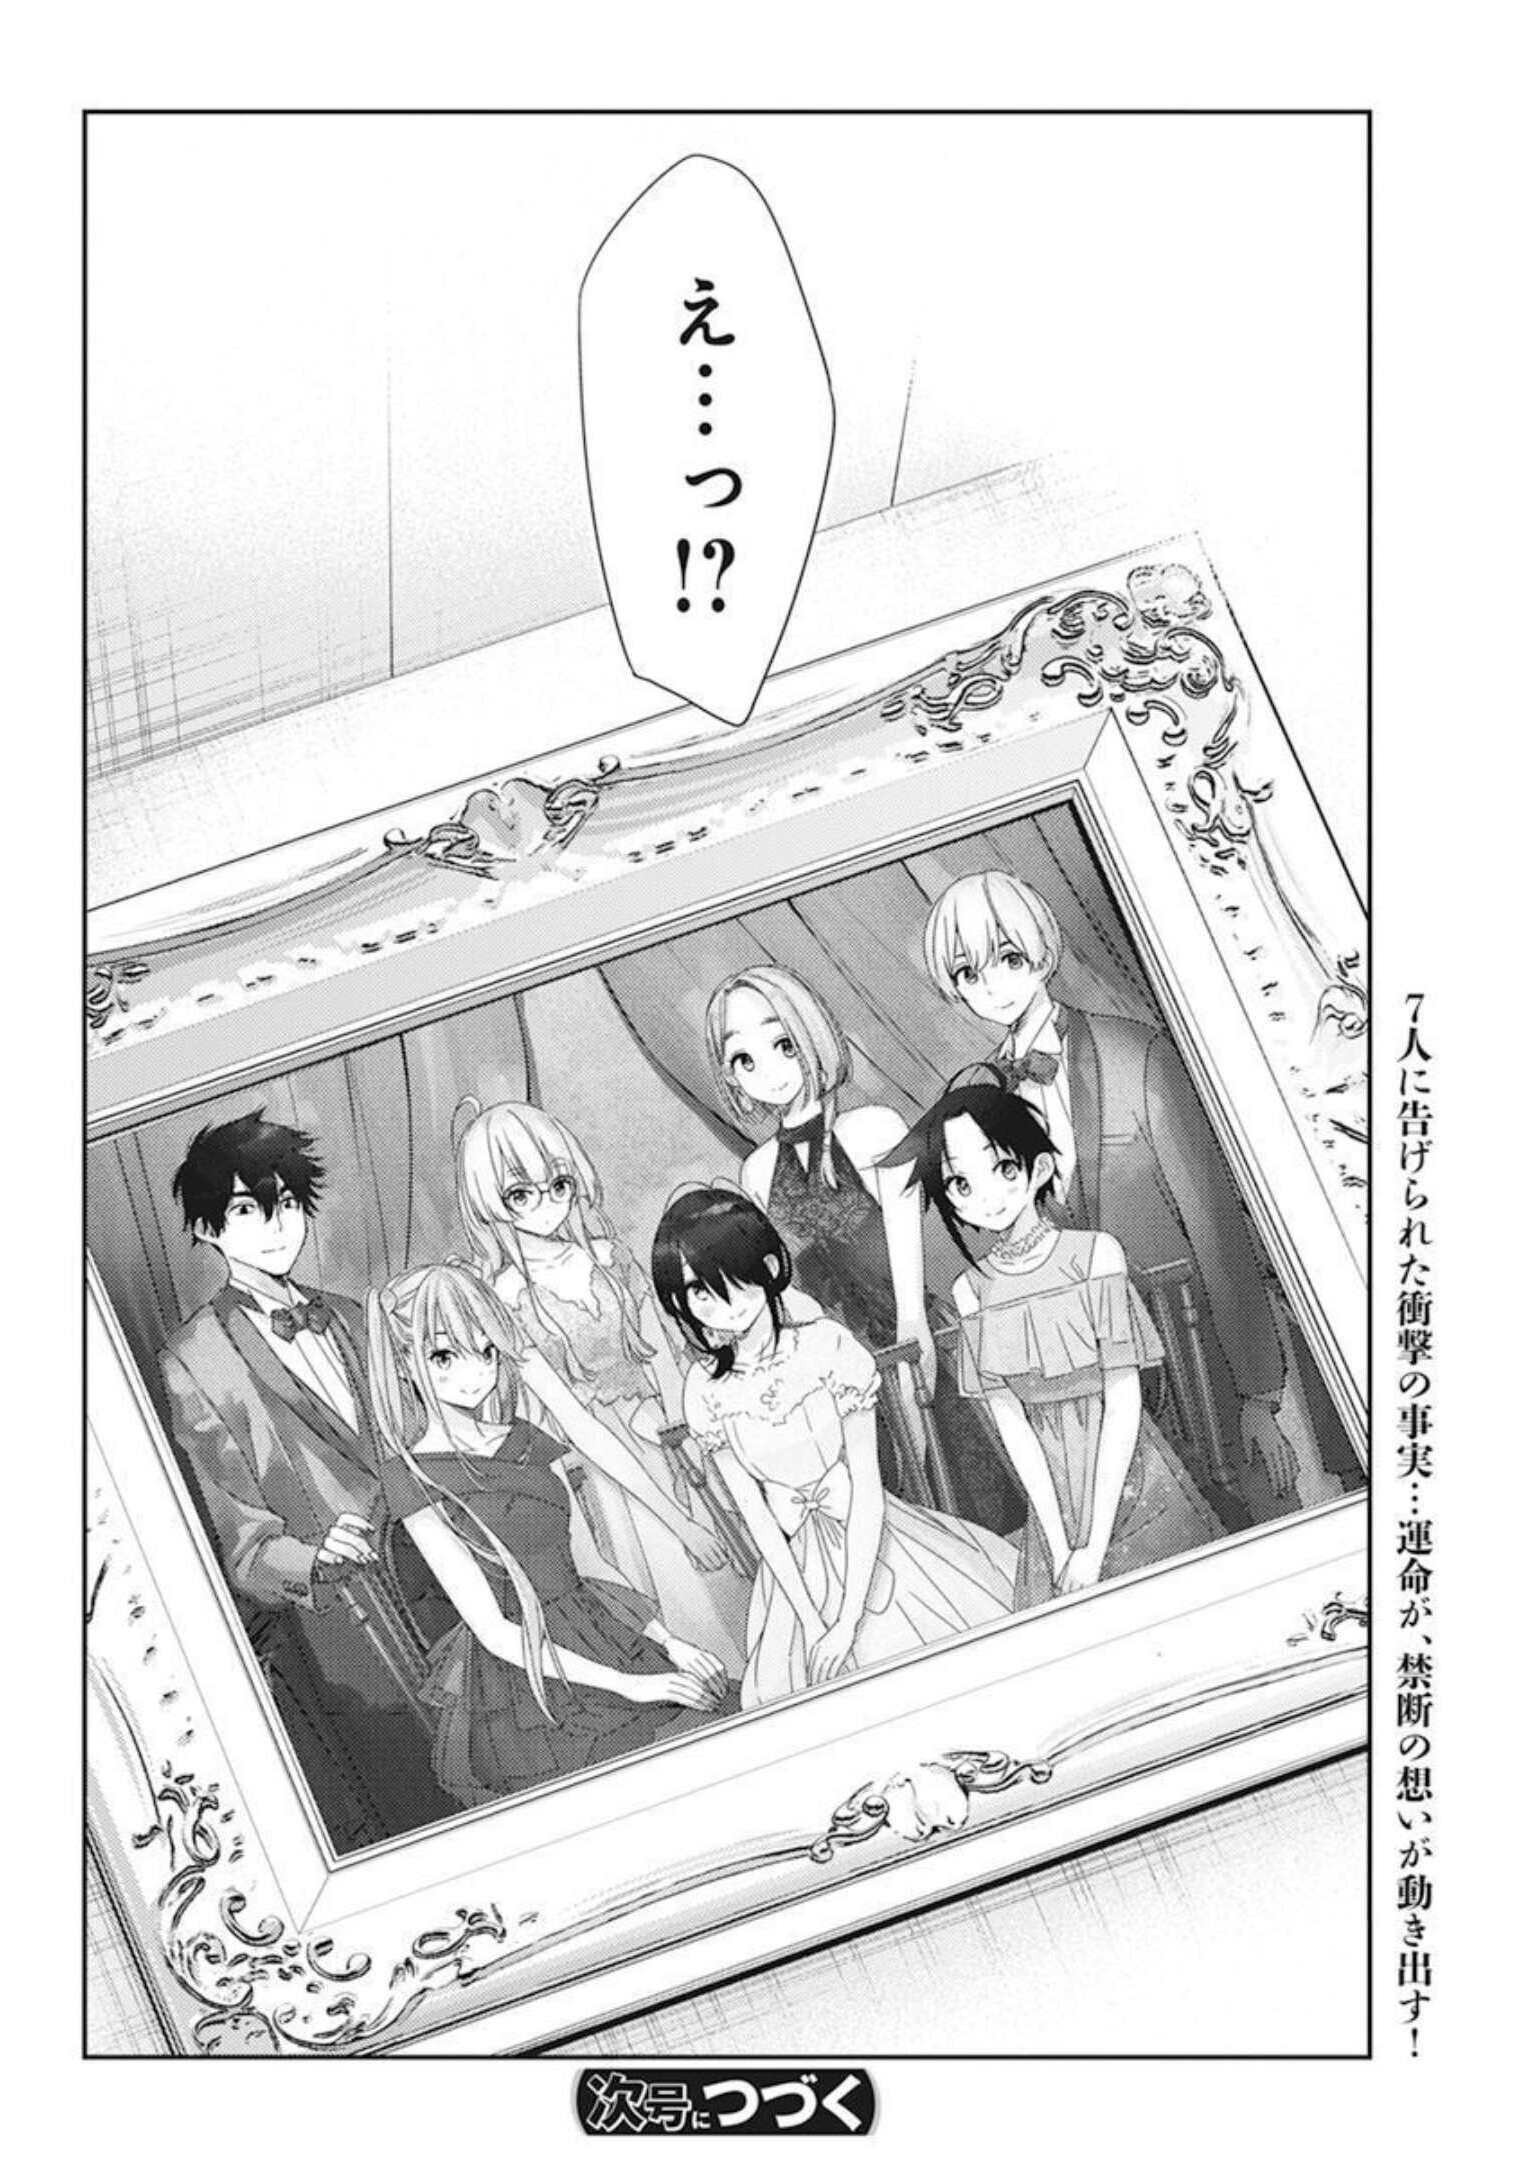 Shiunji-ke no Kodomotachi (Children of the Shiunji Family) - Chapter 01 - Page 52